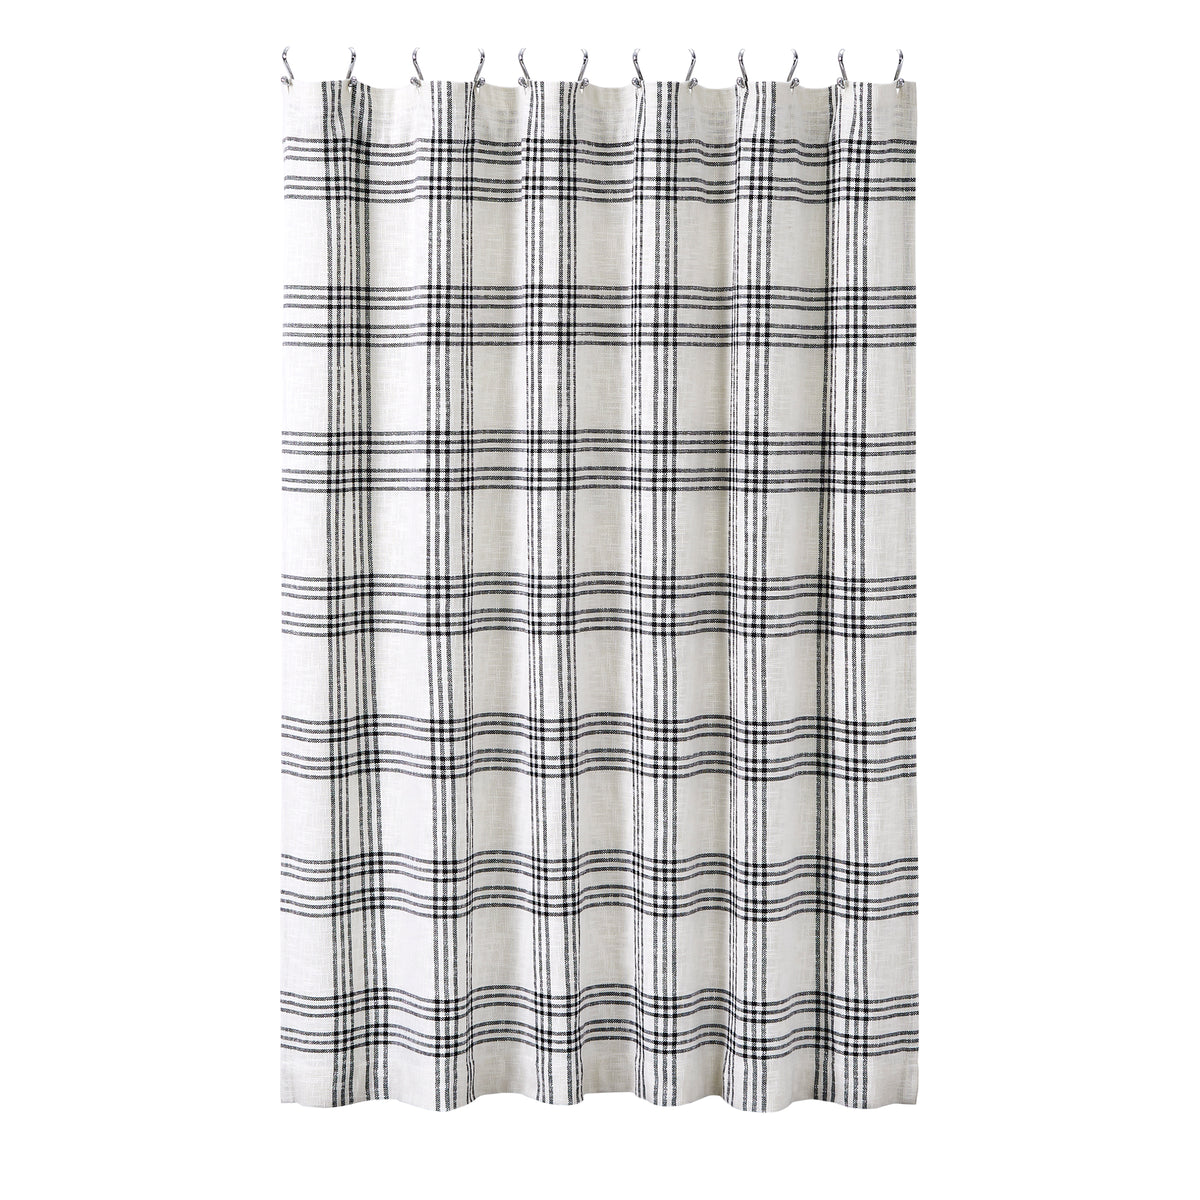 Black Plaid Shower Curtain 72x72